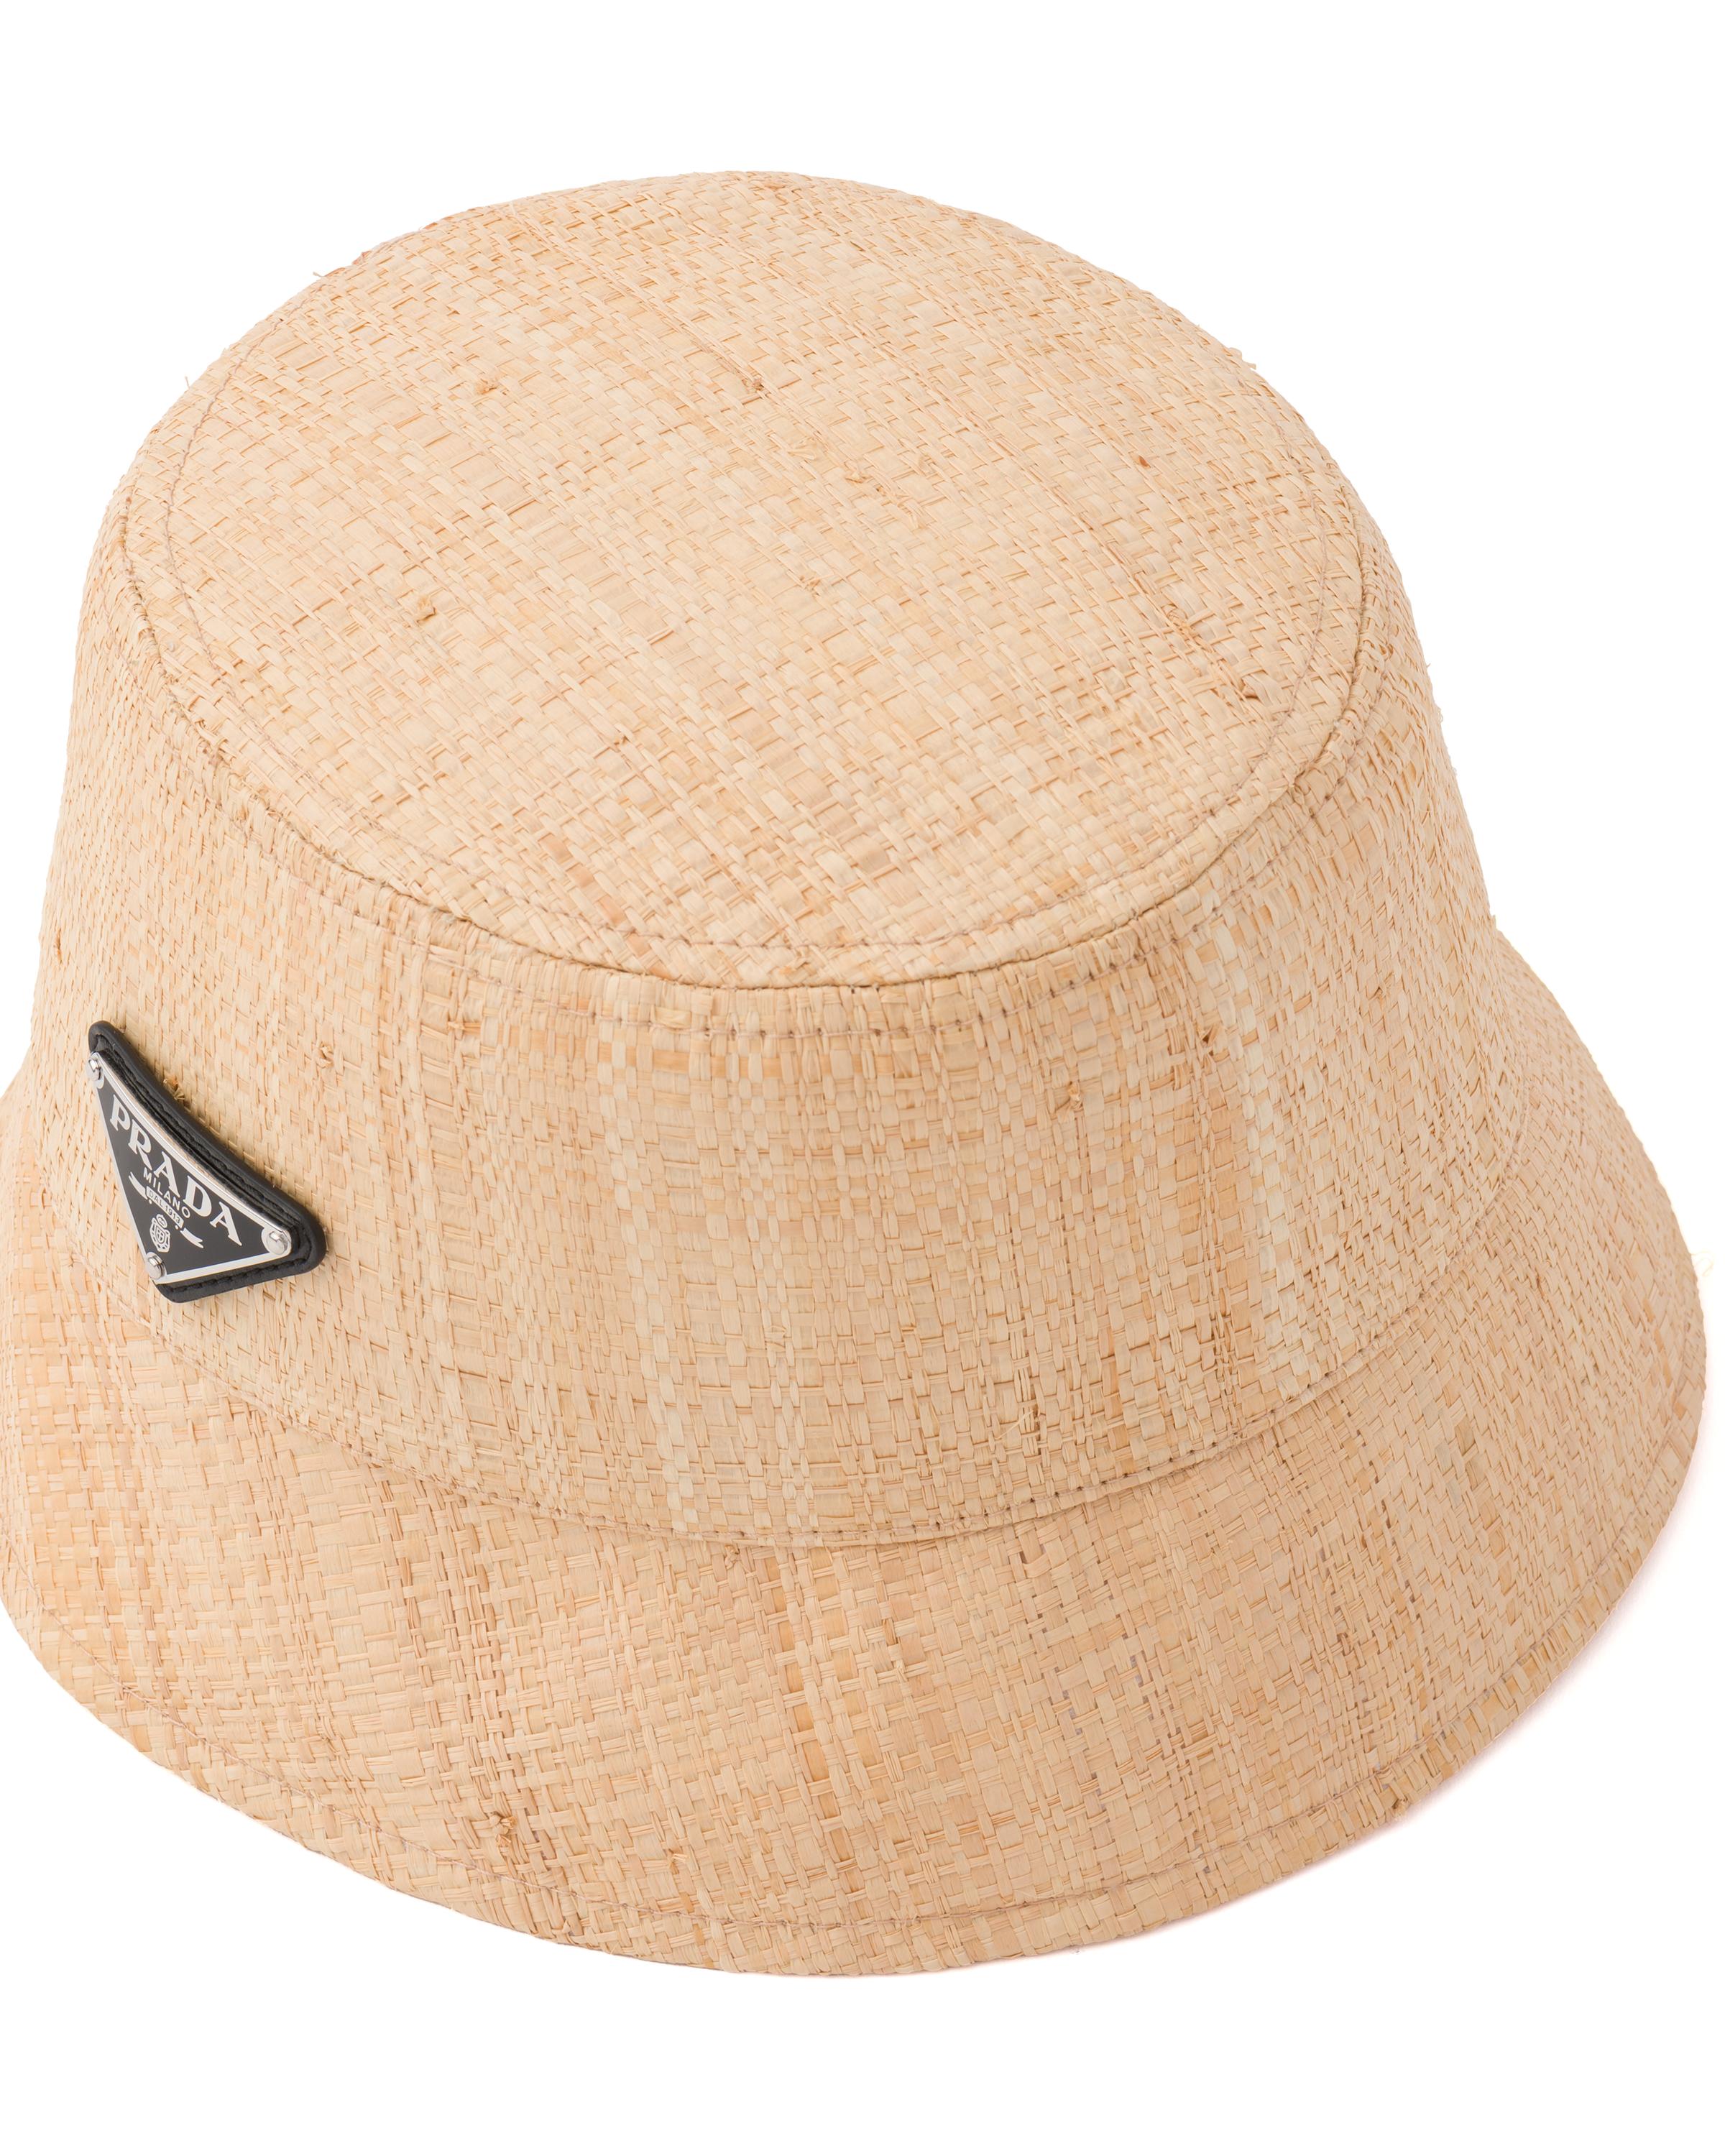 Prada Straw Bucket Hat in Tan/Black (Natural) - Lyst